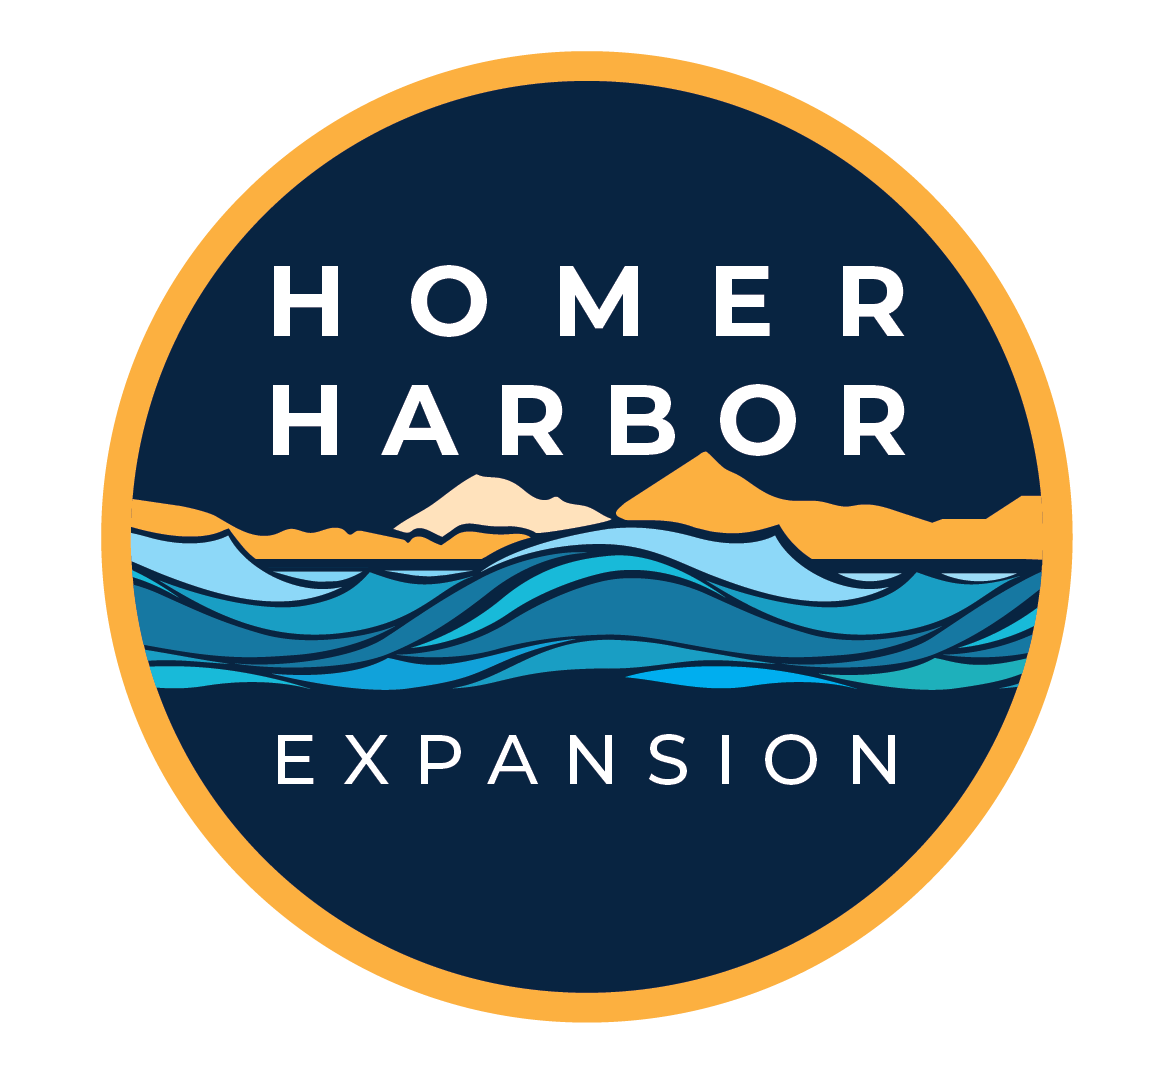 Homer Harbor Expansion